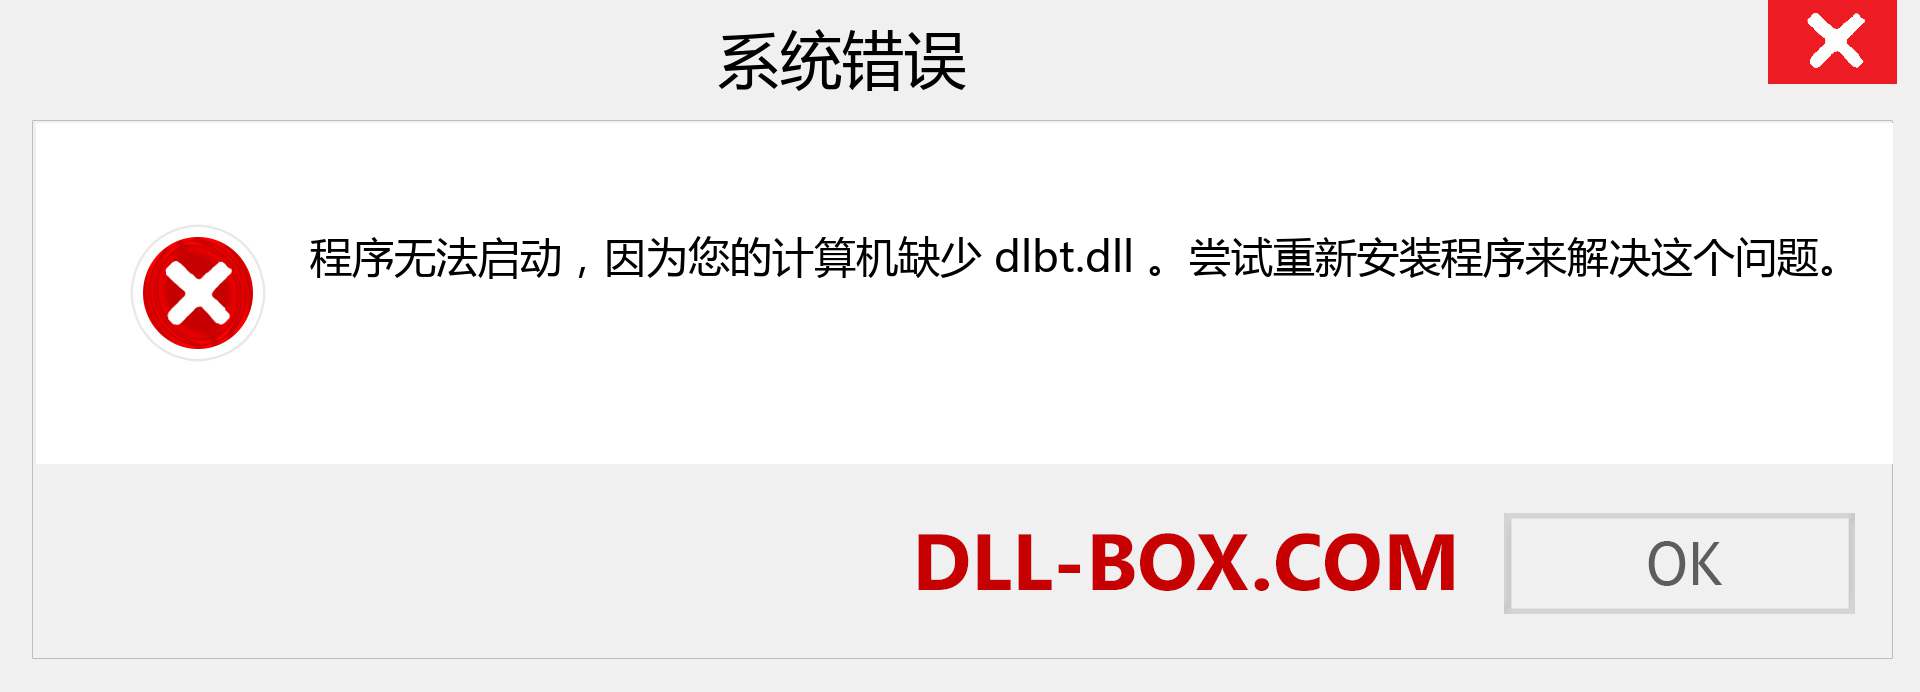 dlbt.dll 文件丢失？。 适用于 Windows 7、8、10 的下载 - 修复 Windows、照片、图像上的 dlbt dll 丢失错误